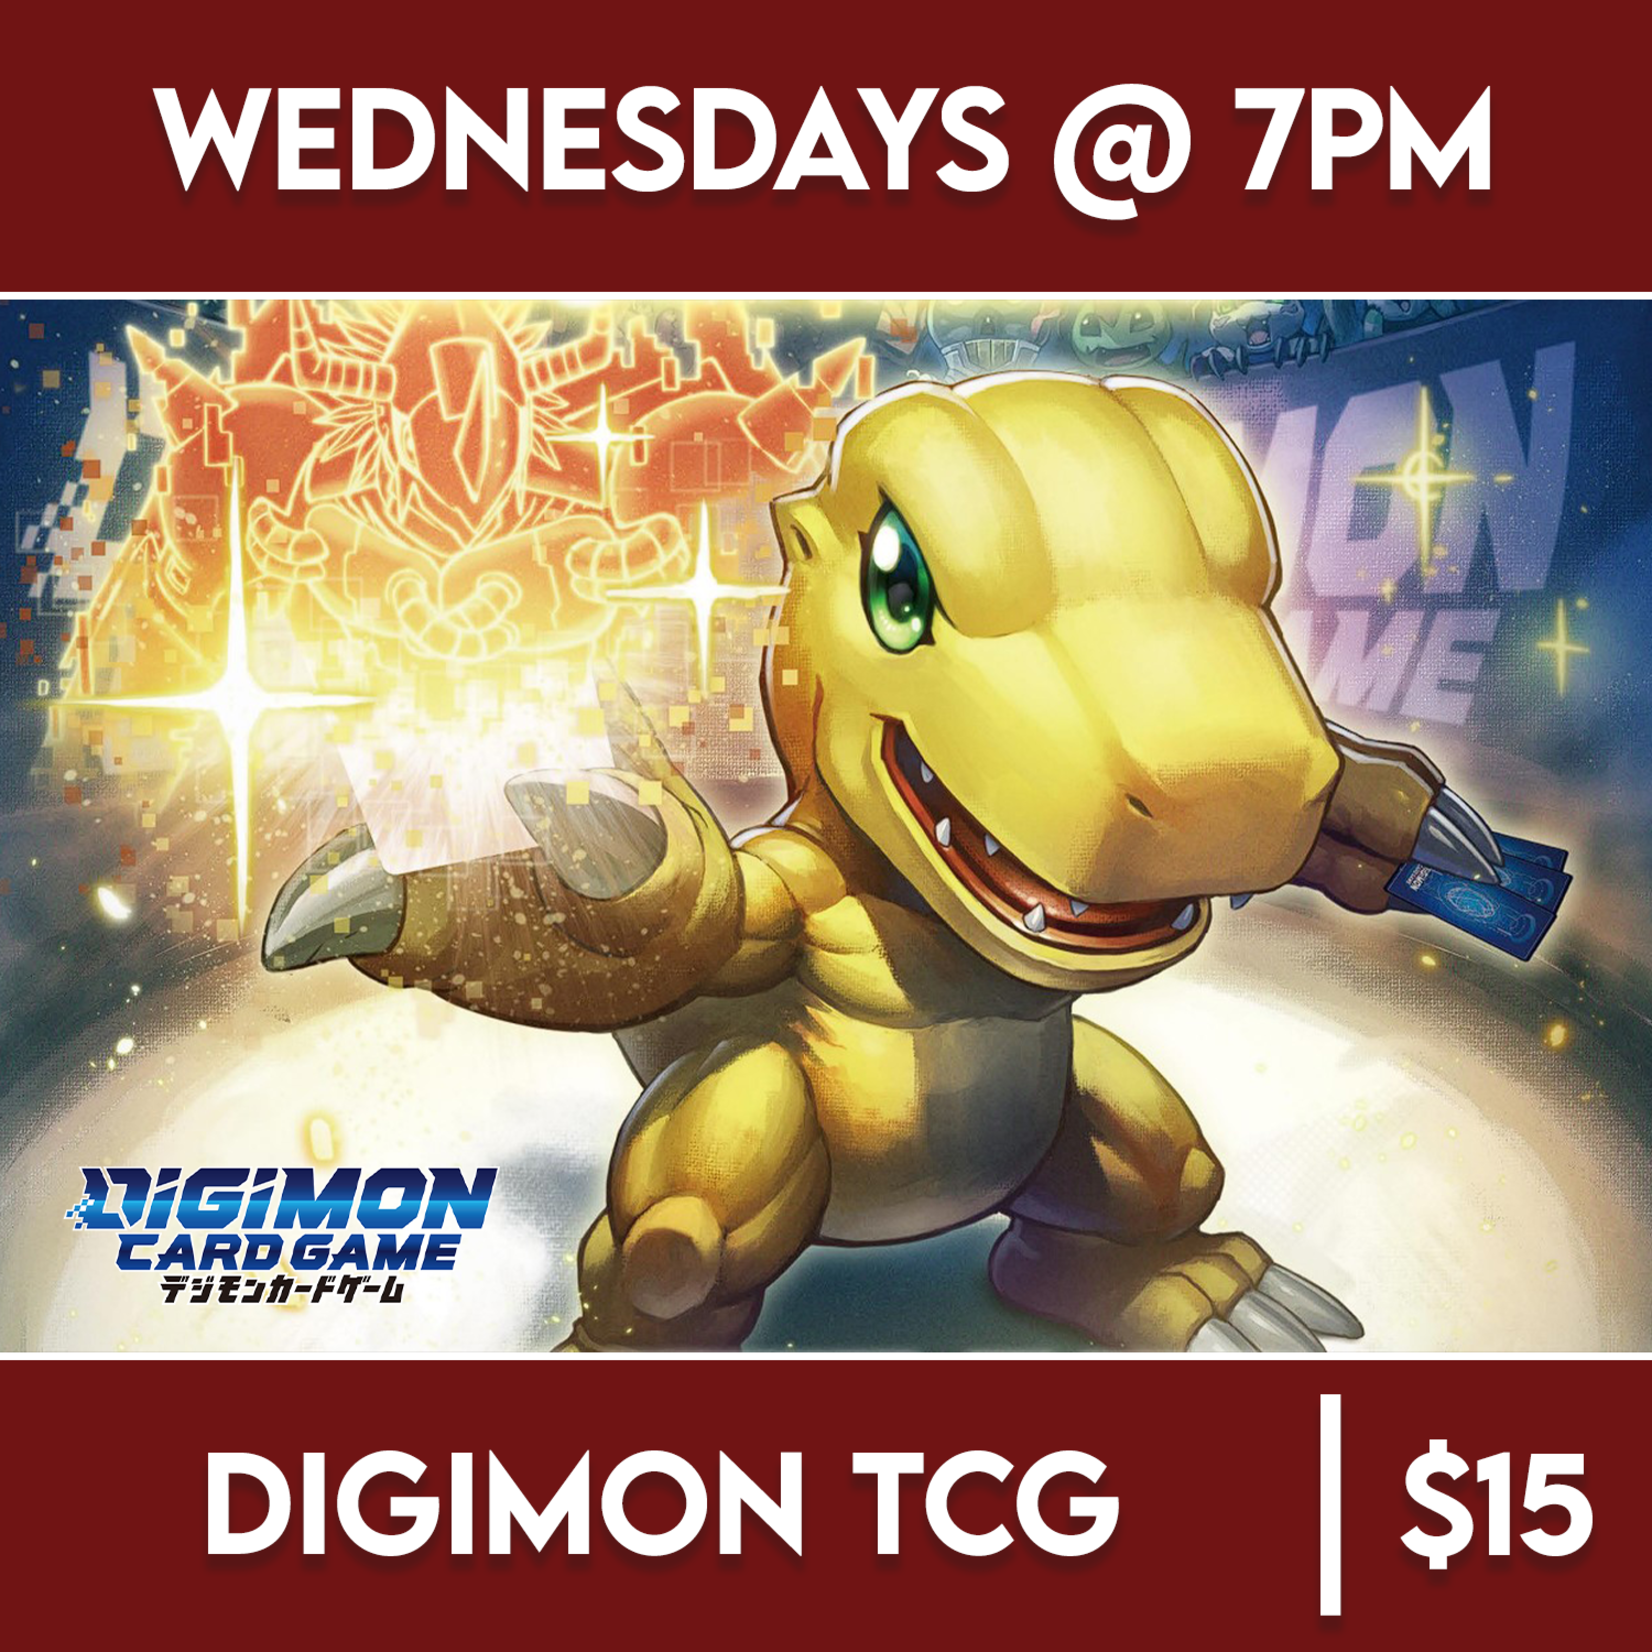 Digimon TCG Events 04/24 Wednesday @ 7 PM - Digimon TCG